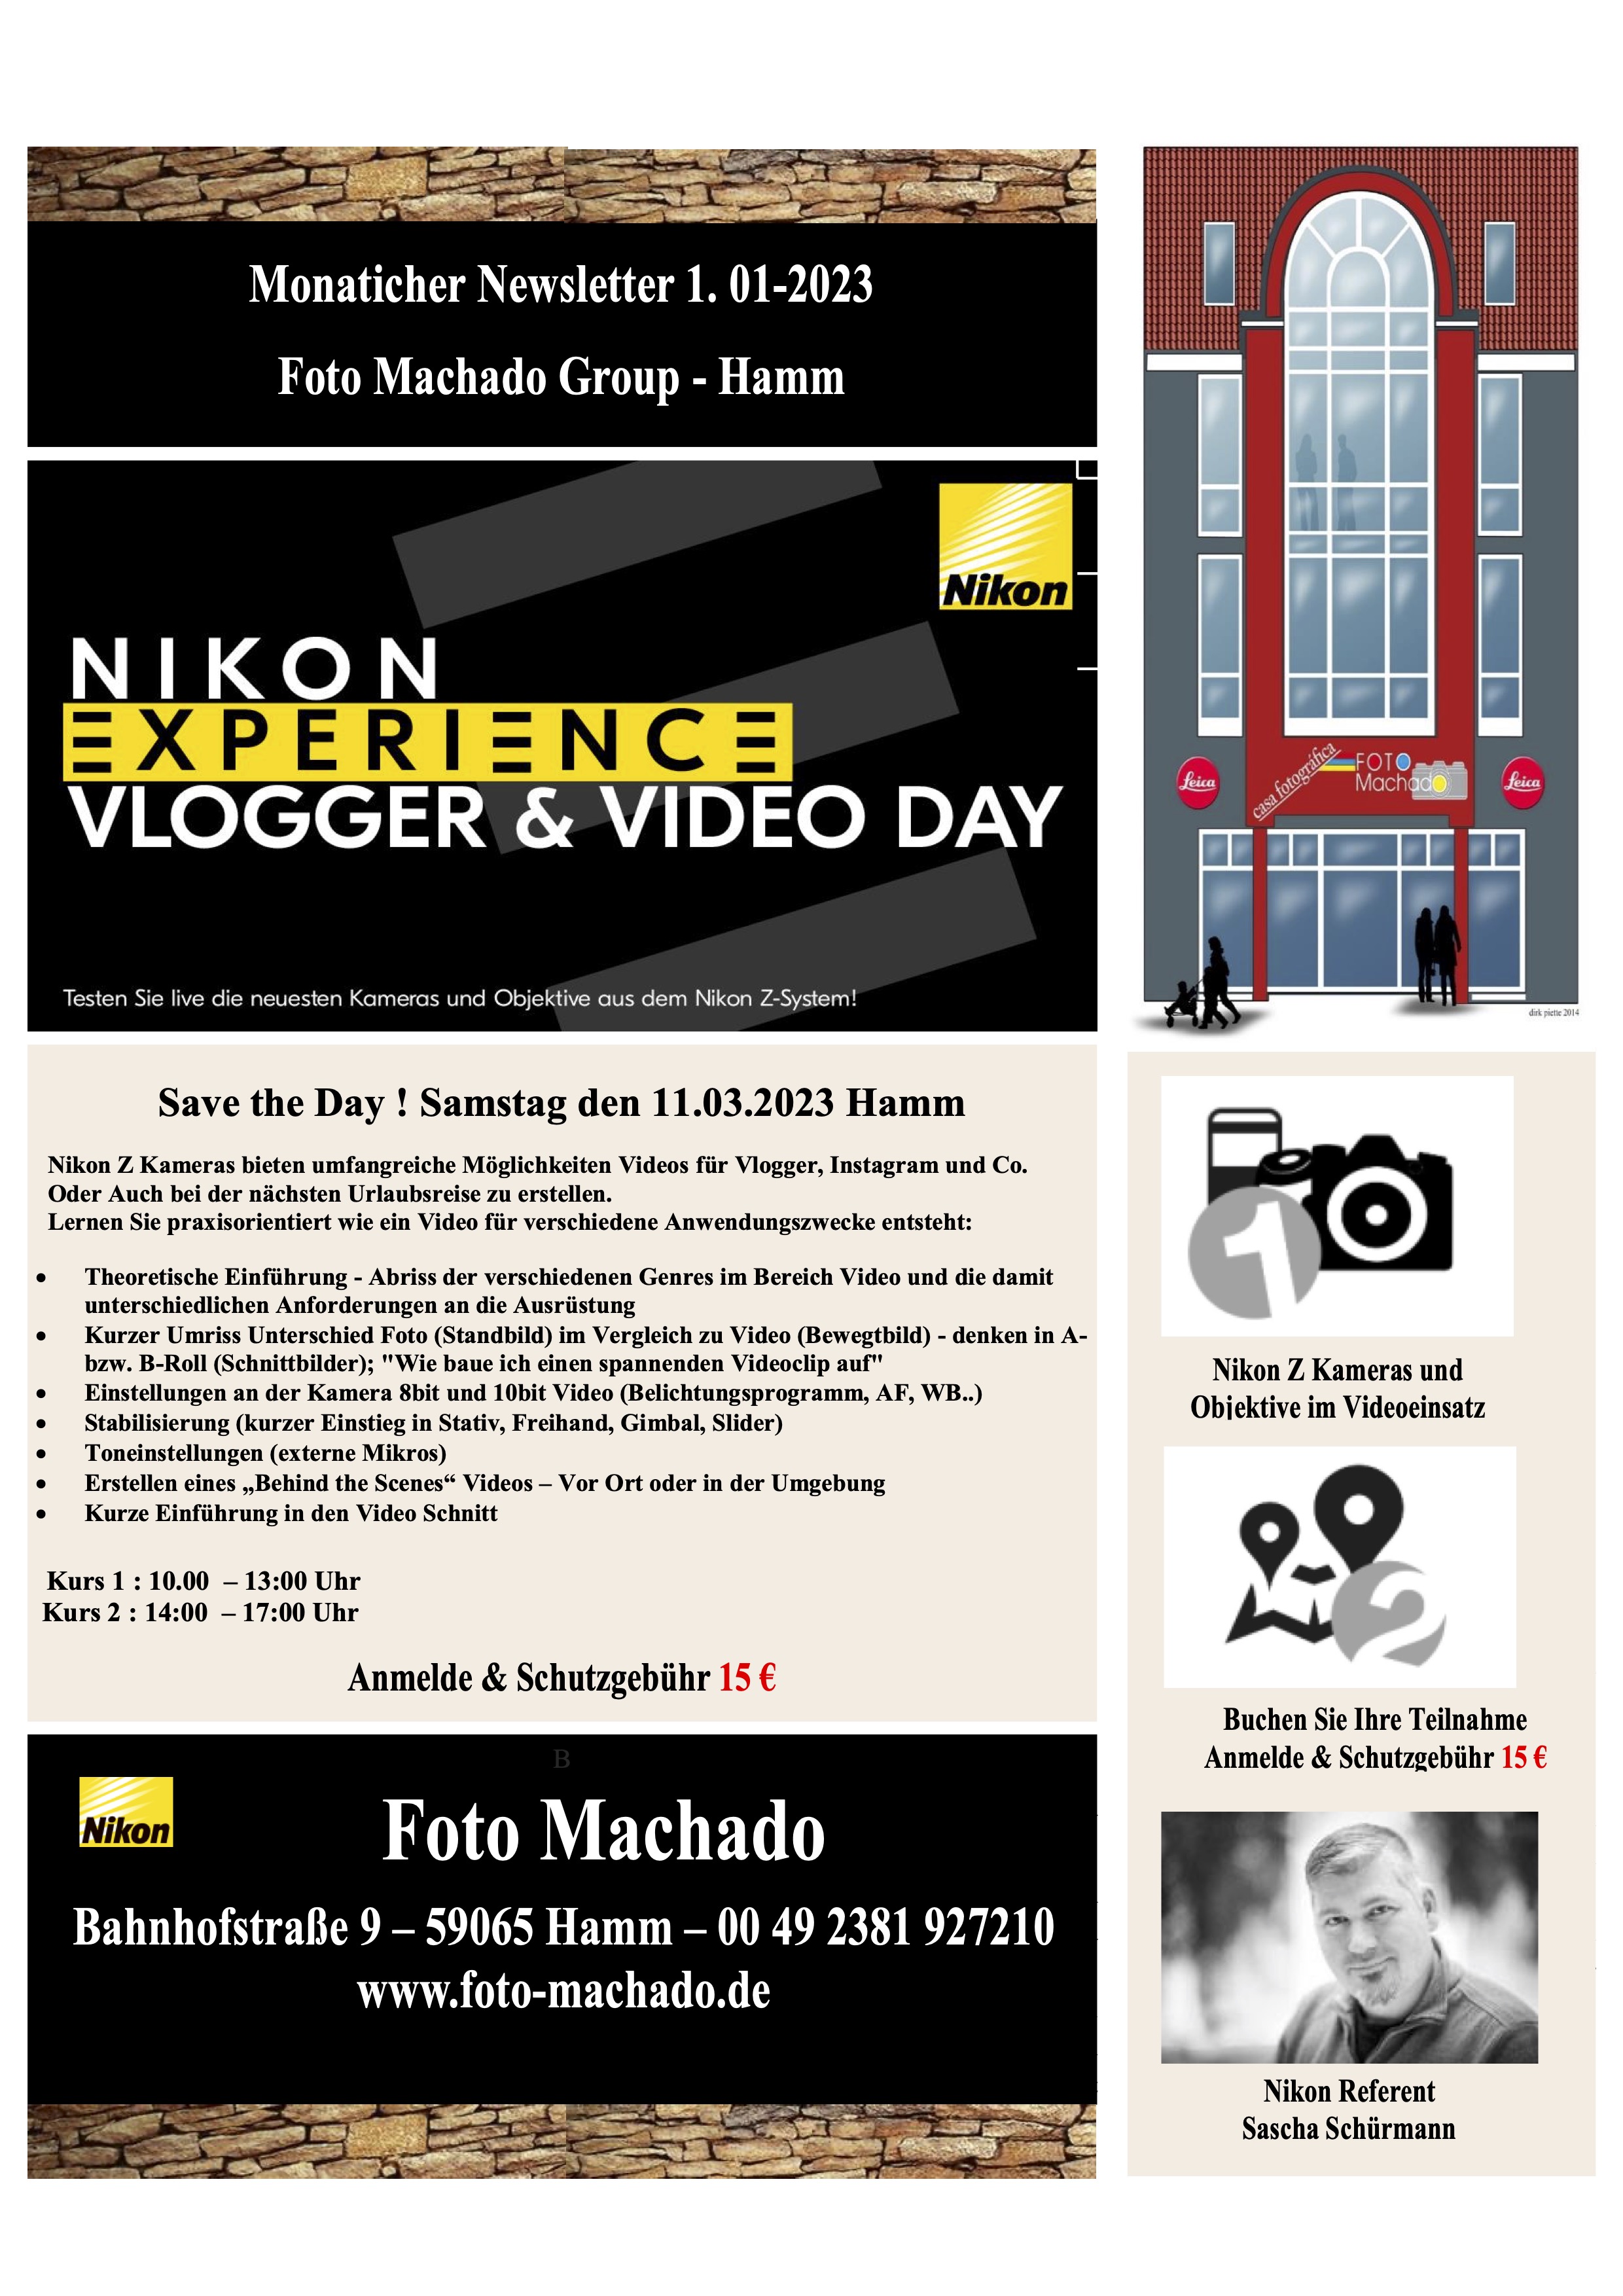 Nikon Vlogger